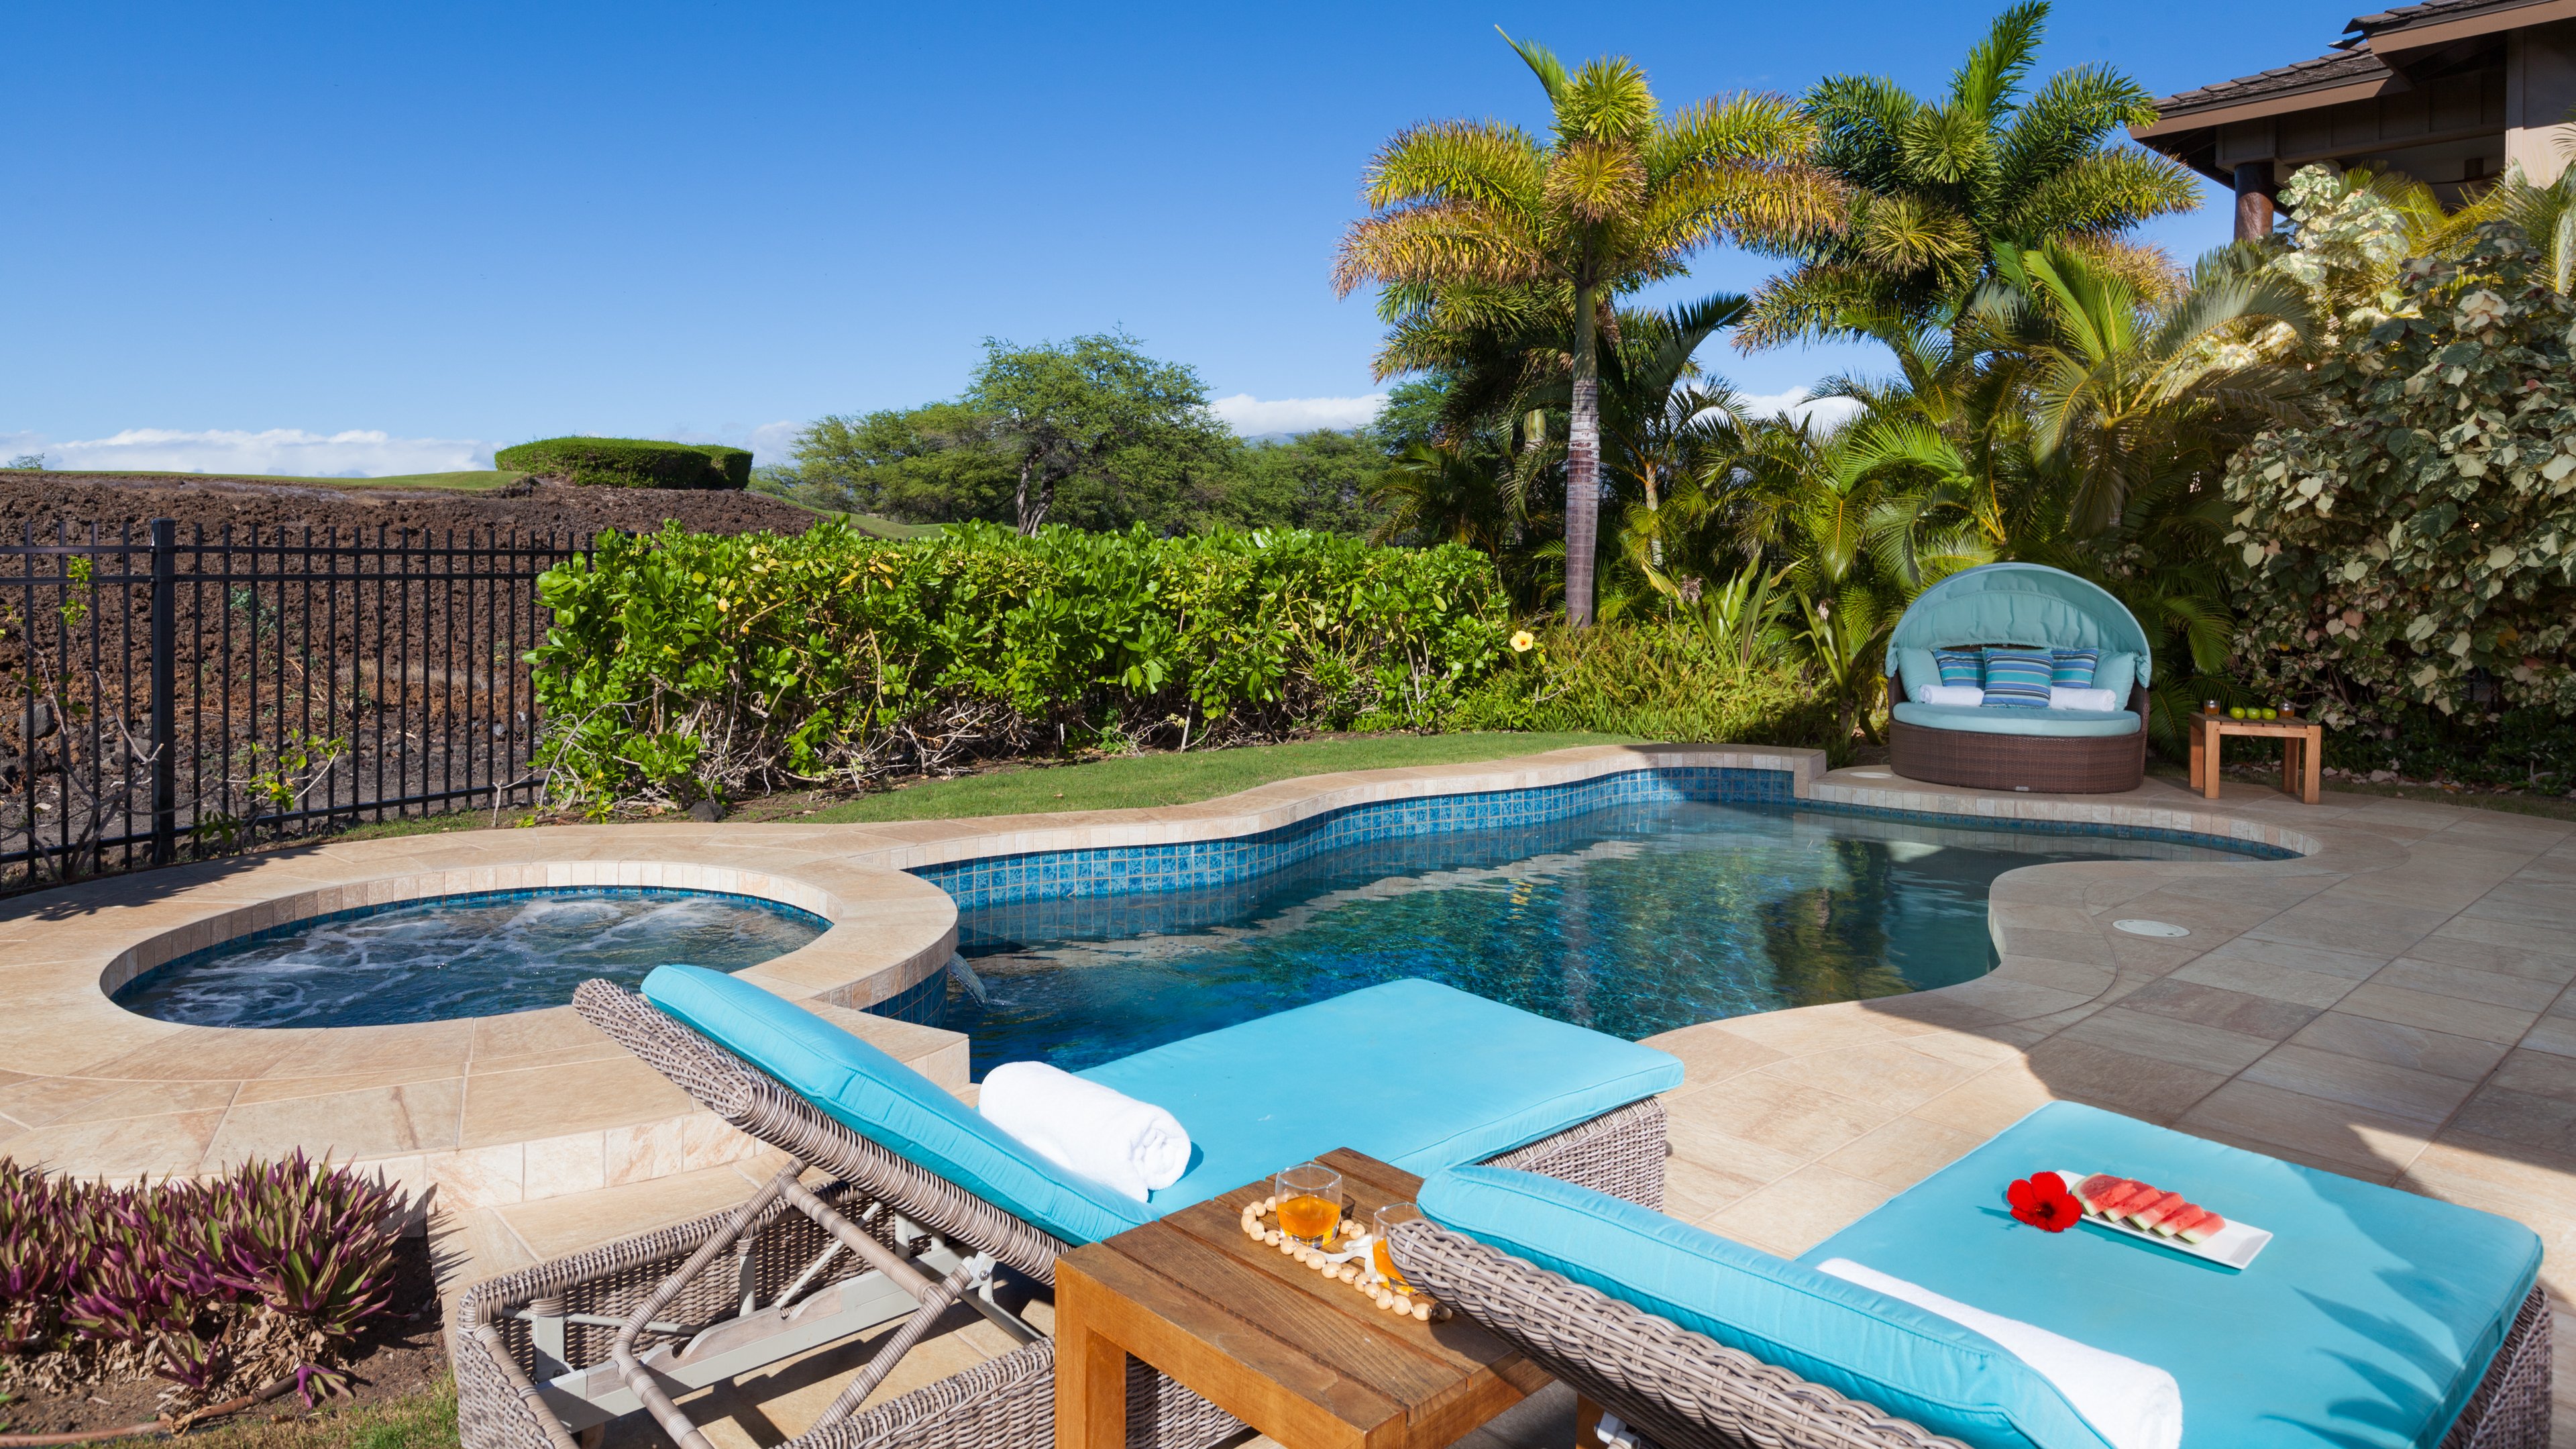 Your backyard Oasis - heated pool and spa